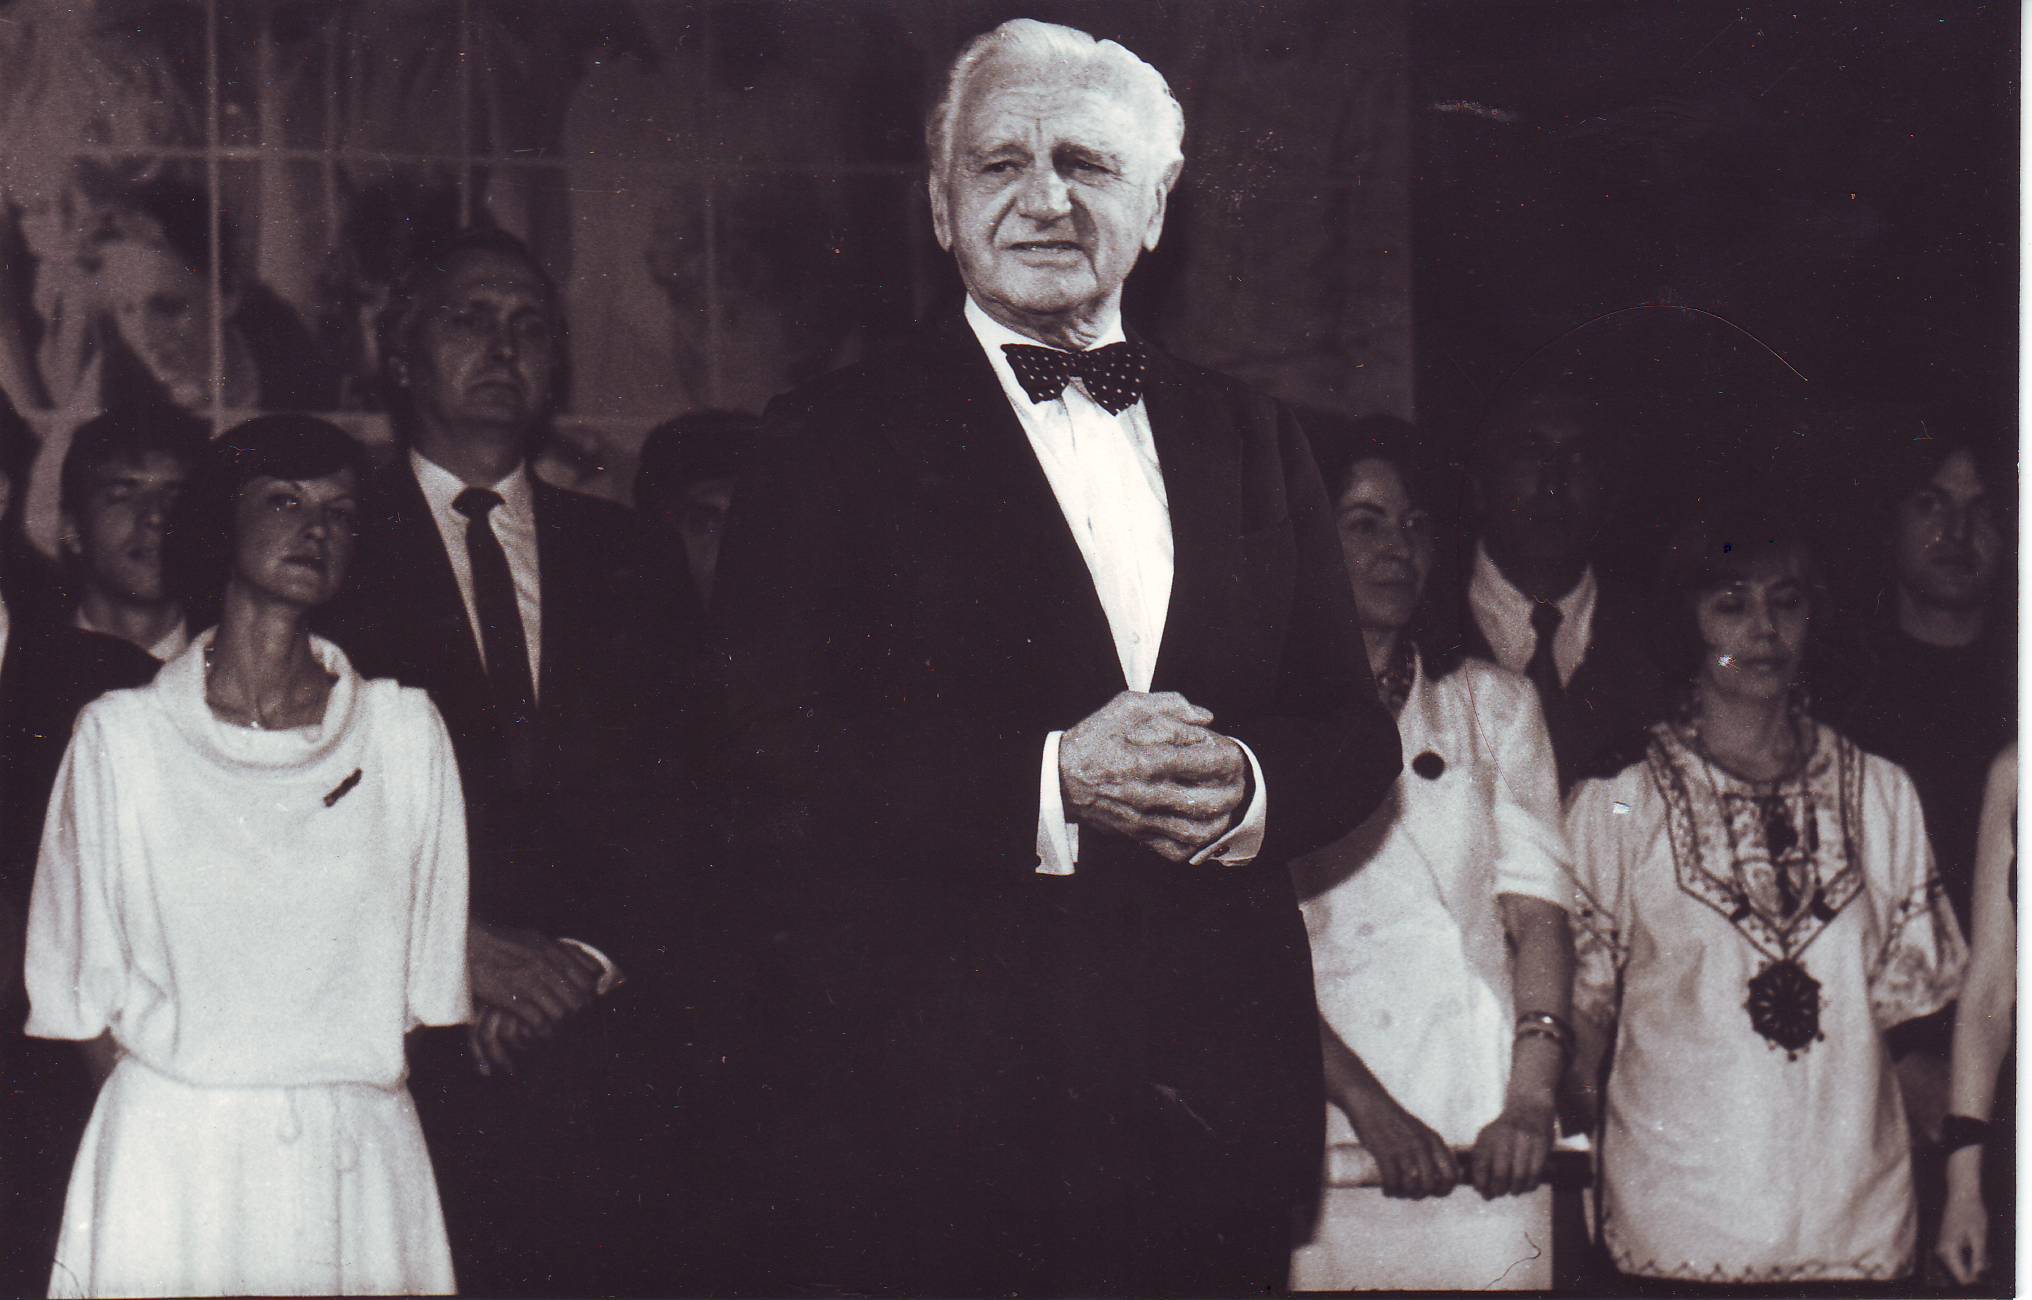 Ion Raţiu during 1980s